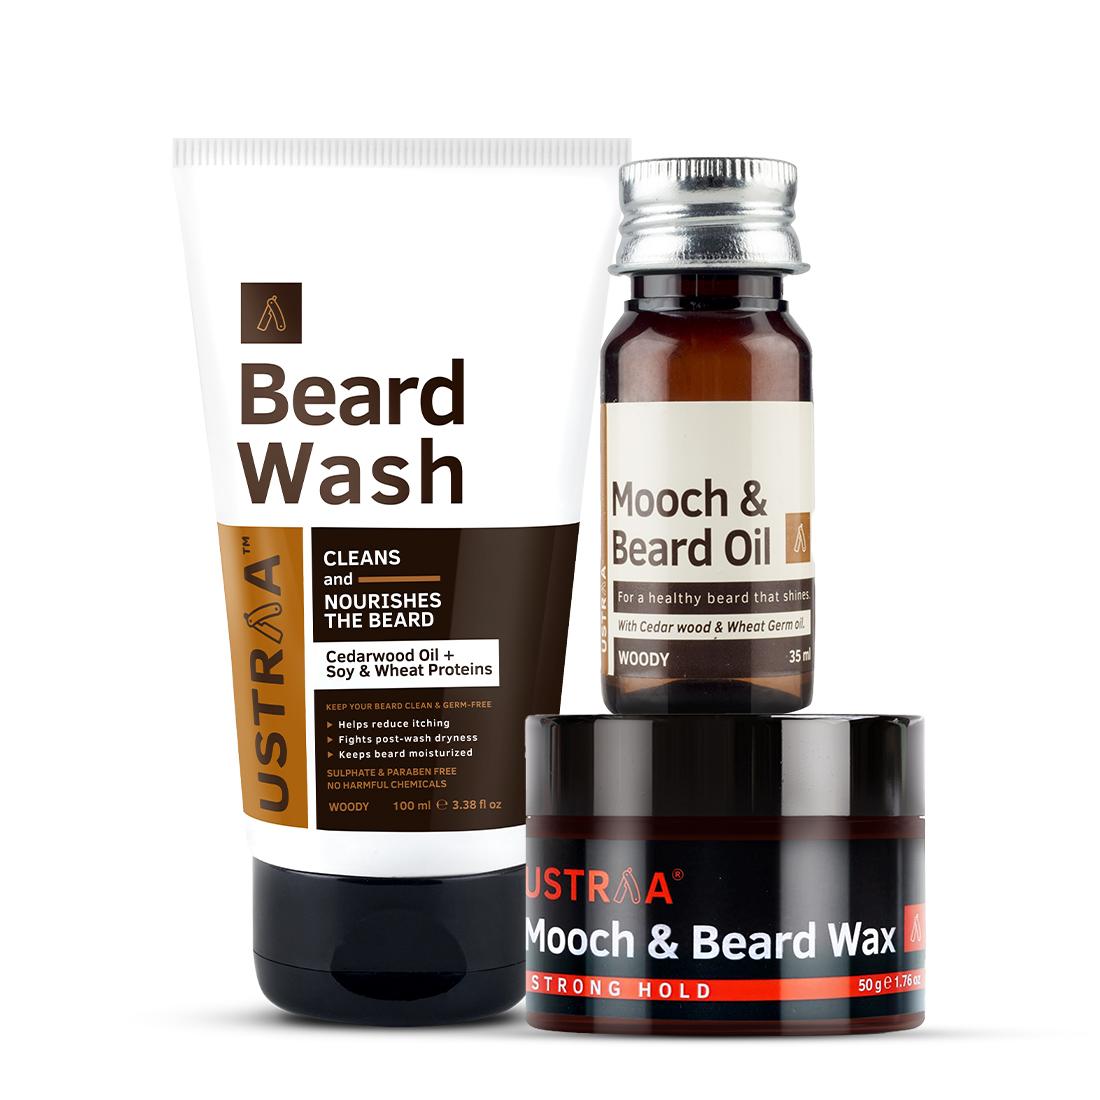 Ustraa Beard Lover Pack - Beard Wash & Mooch & Beard Oil and Mooch & Beard wax